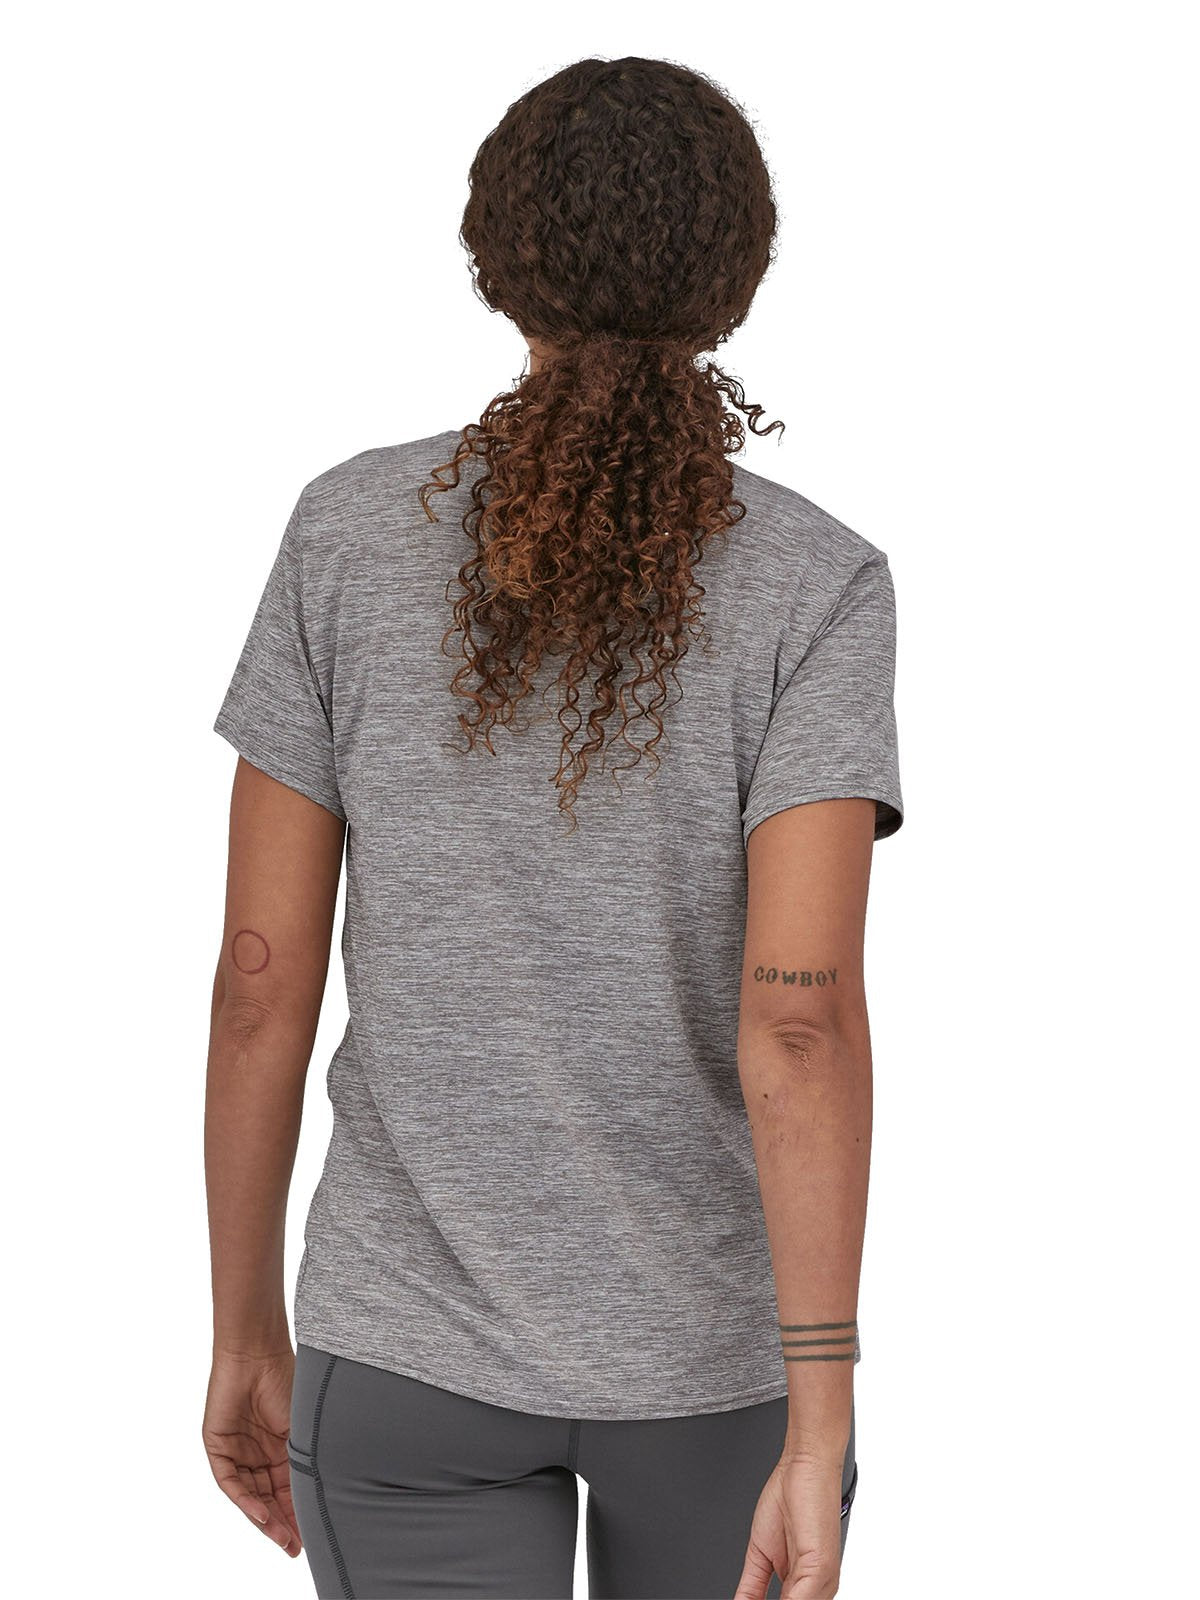 T-shirt Donna Patagonia - Women's Capilene® Cool Daily Shirt - Grigio